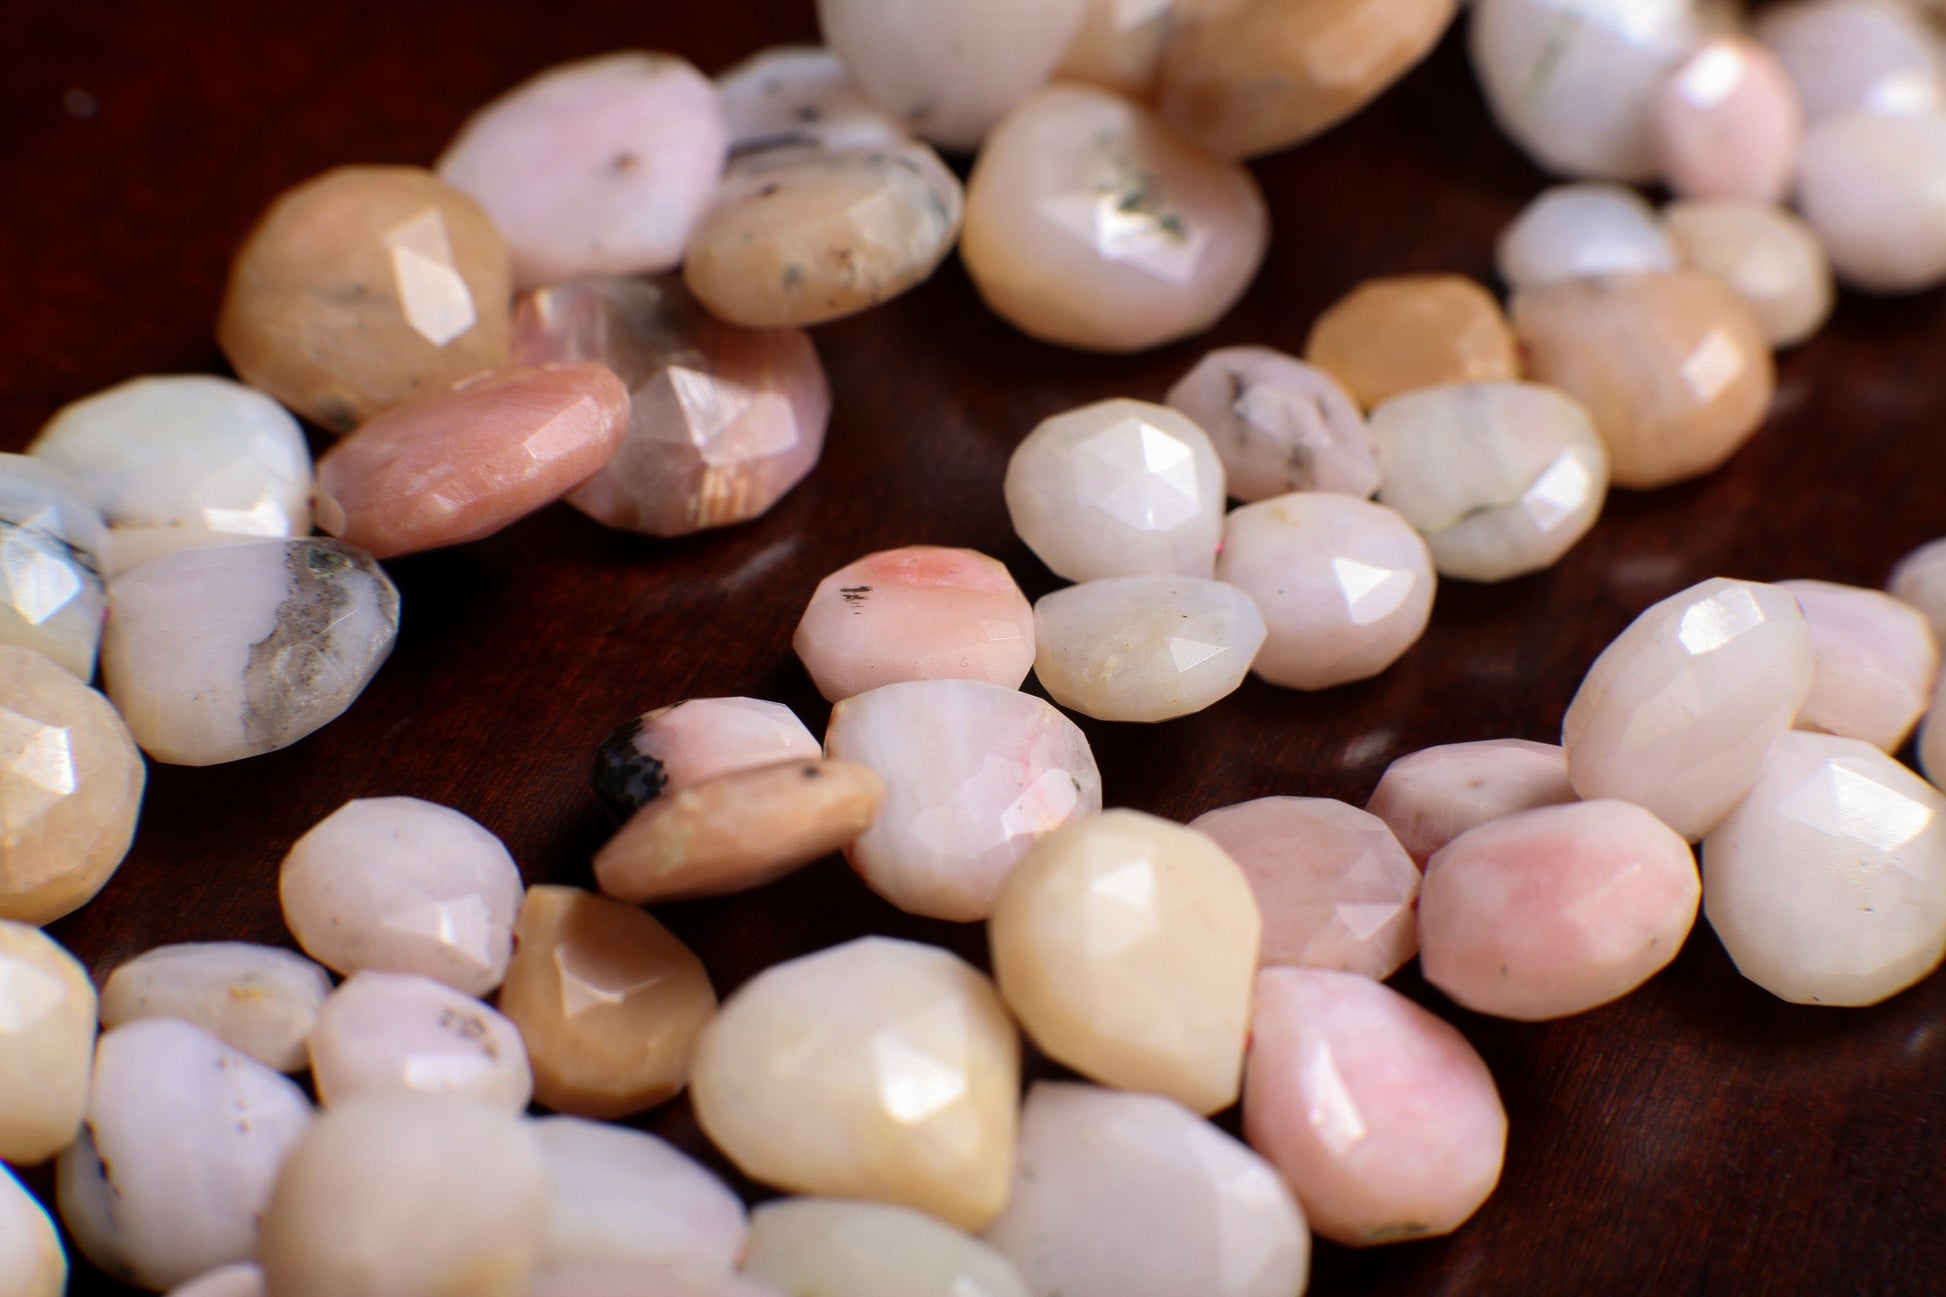 Natural Pink Peruvian Opal Faceted Pear Drop, DIY Jewelry Making Gemstone 11-12mm heart shapeTeardrop Beads,